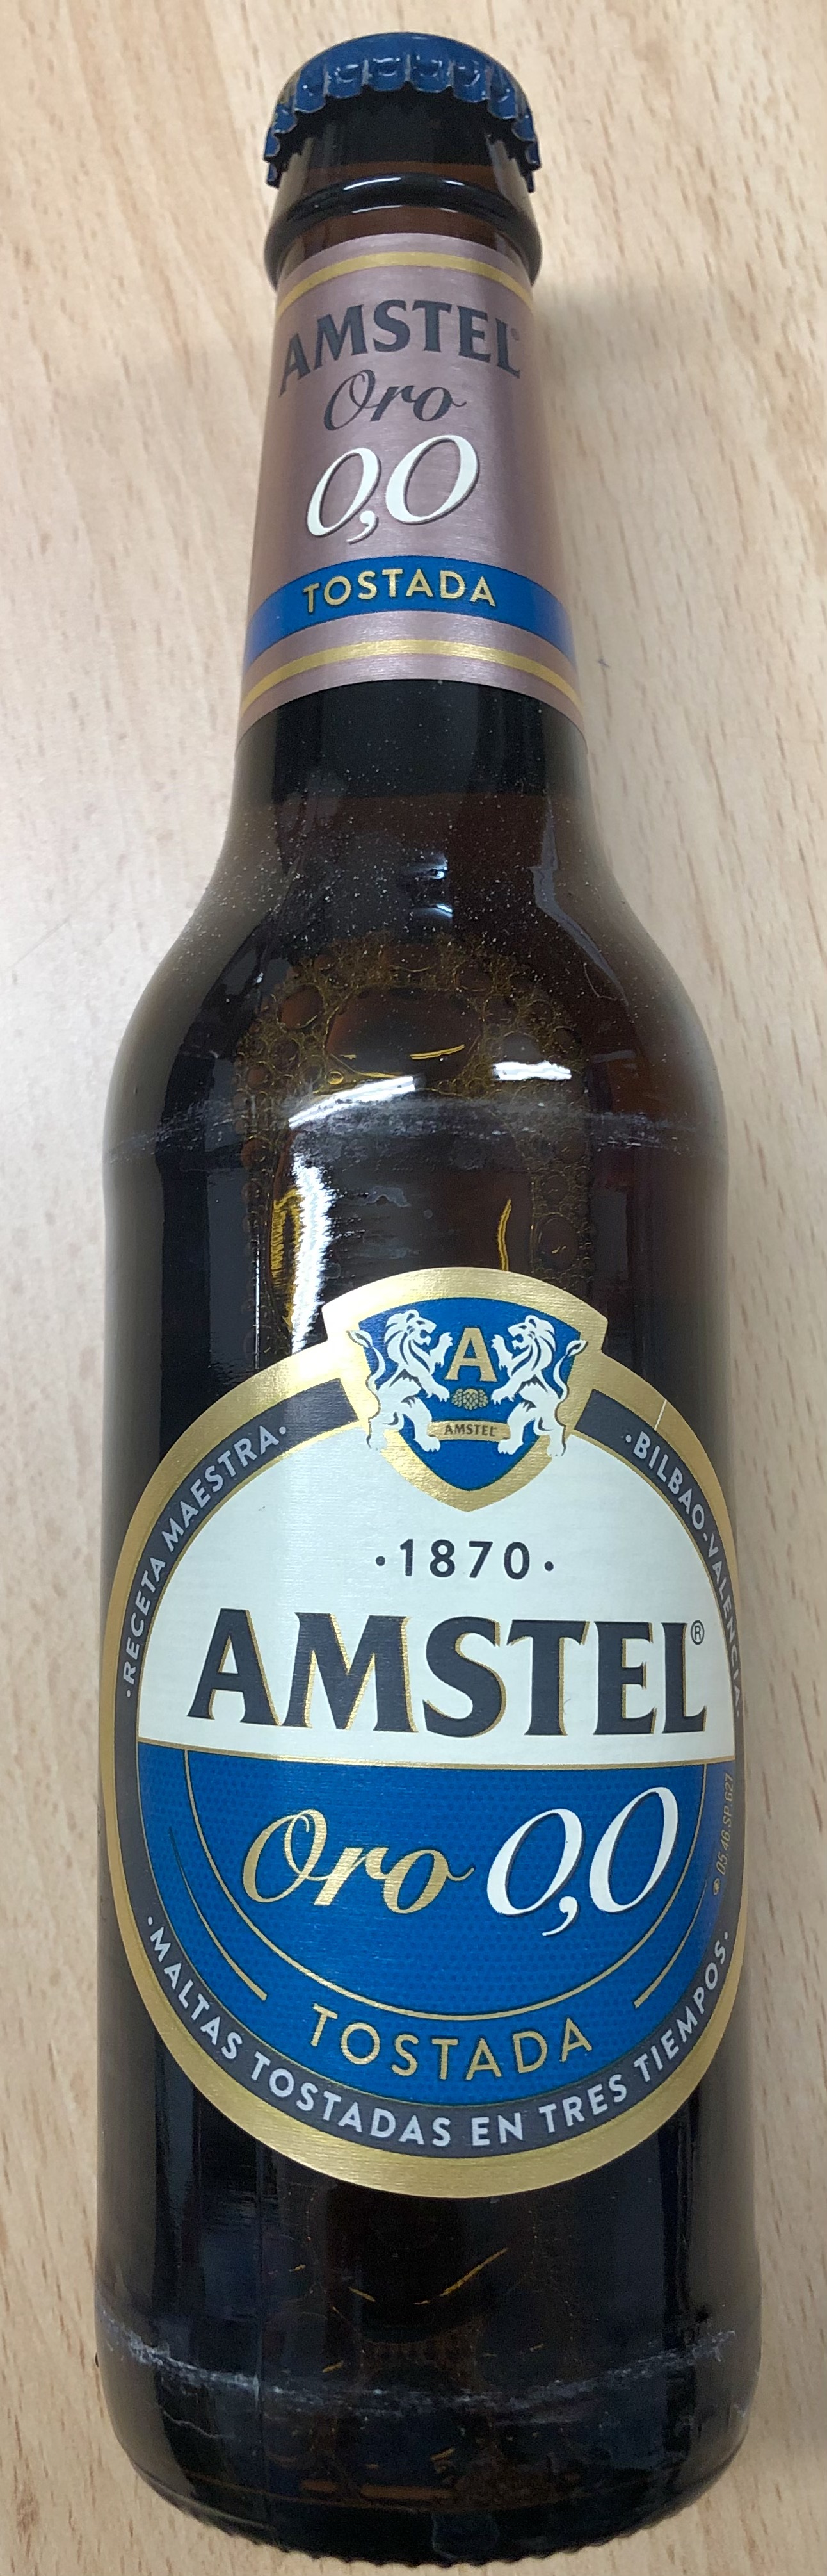 Amstel gold 0.0 toast